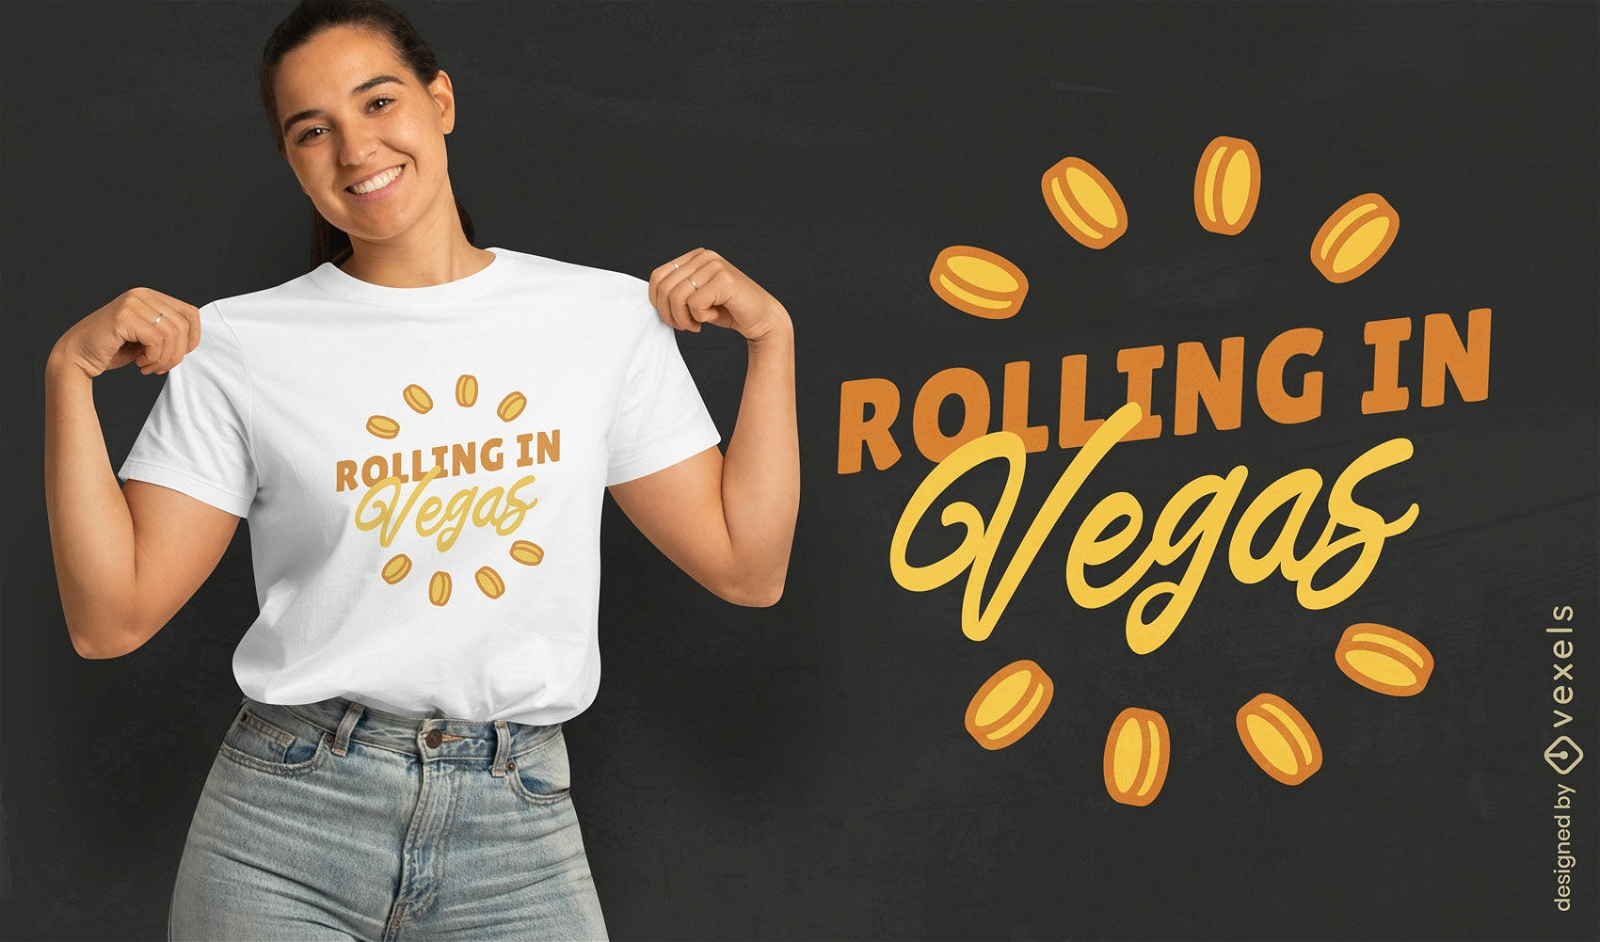 Rolling in Vegas t-shirt design